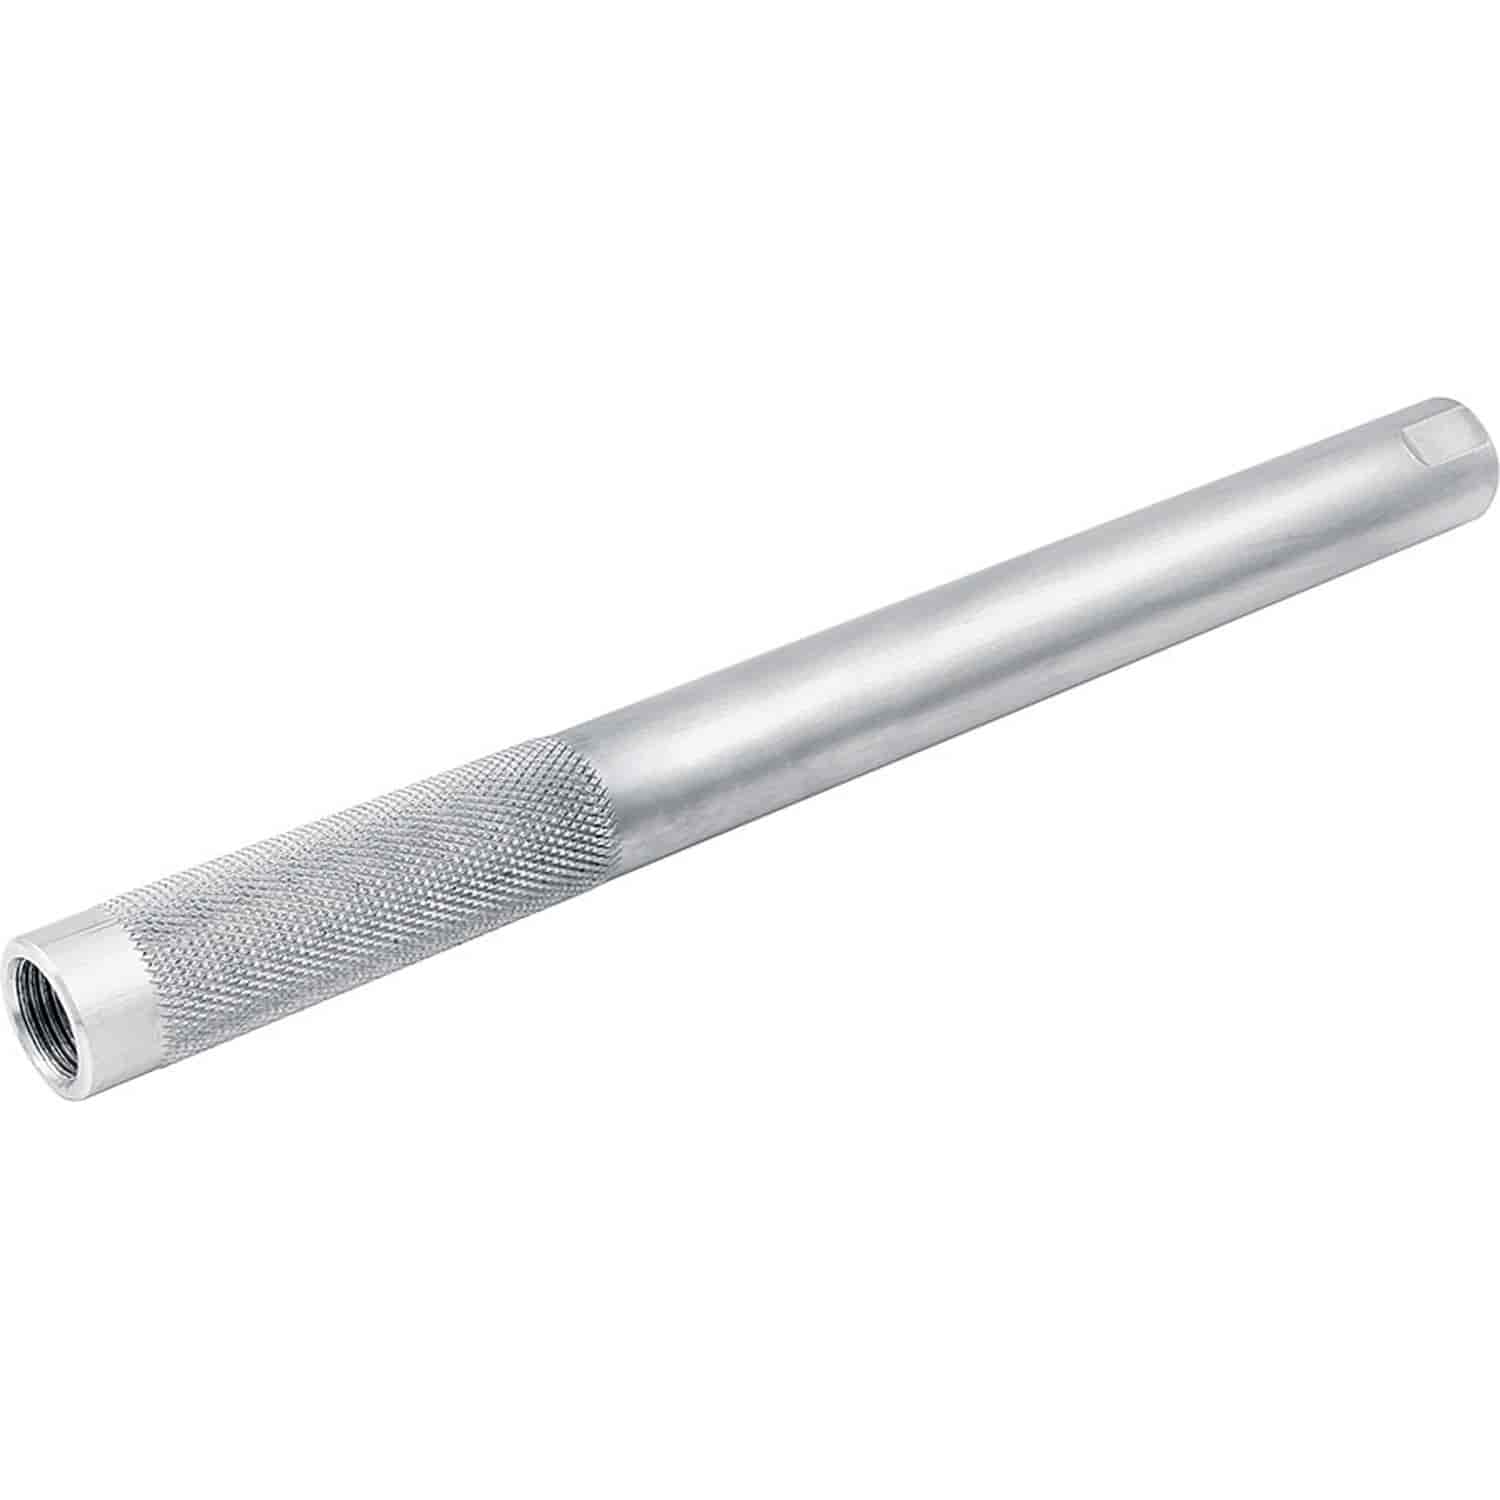 Swedged Aluminum Tie Rod Tube Length: 11"